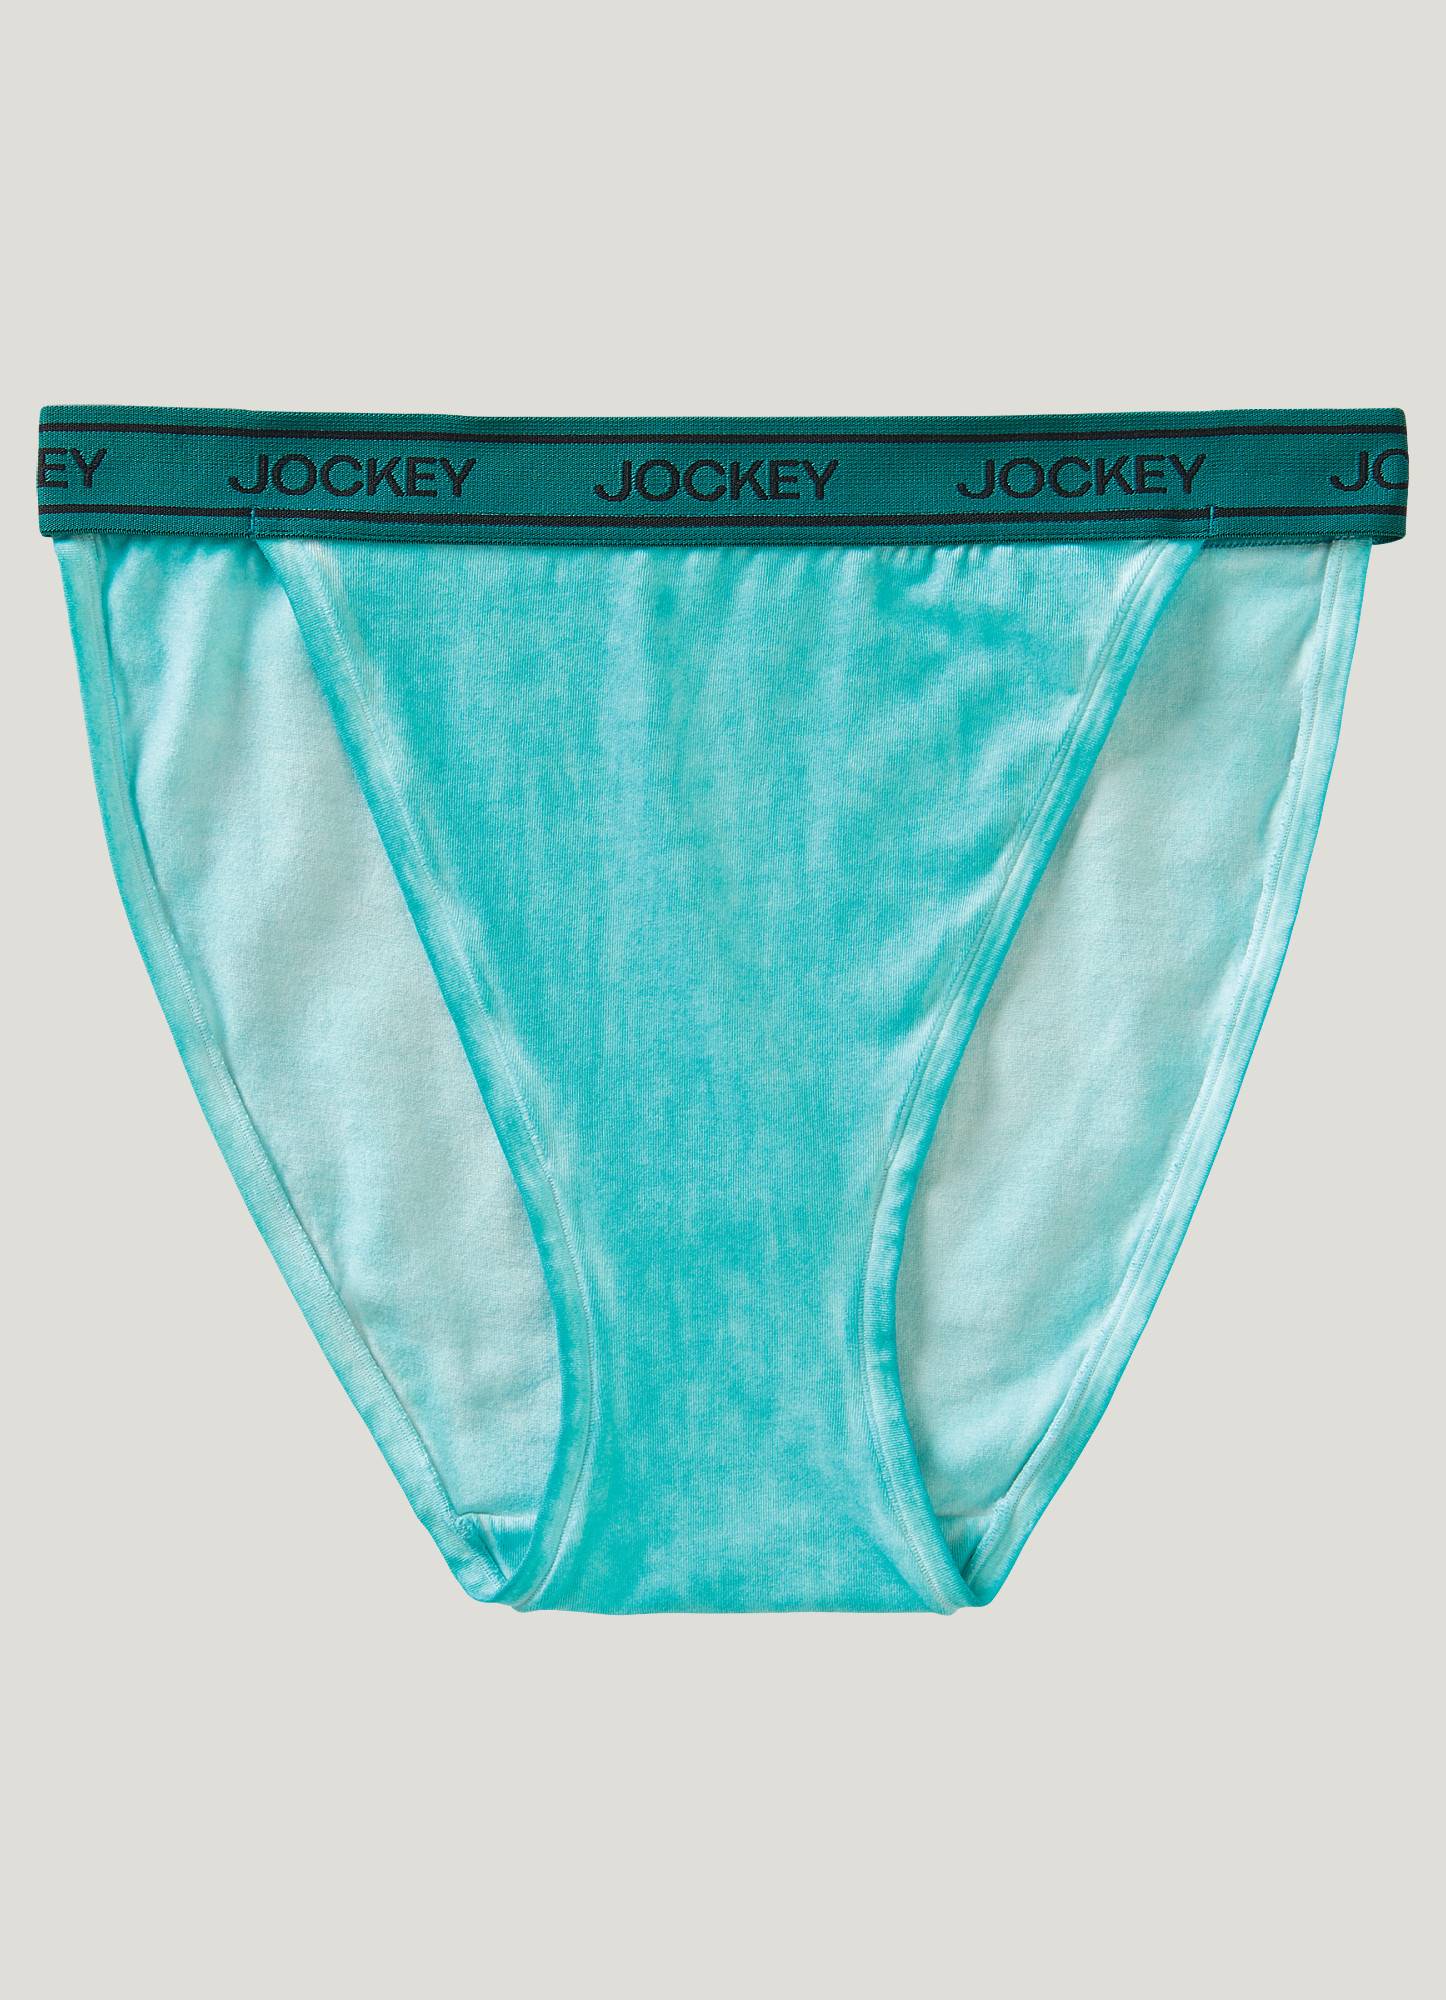 Jockey Women's Underwear EcoComfort Hi Cut, Black, 6 mujer ropa interior